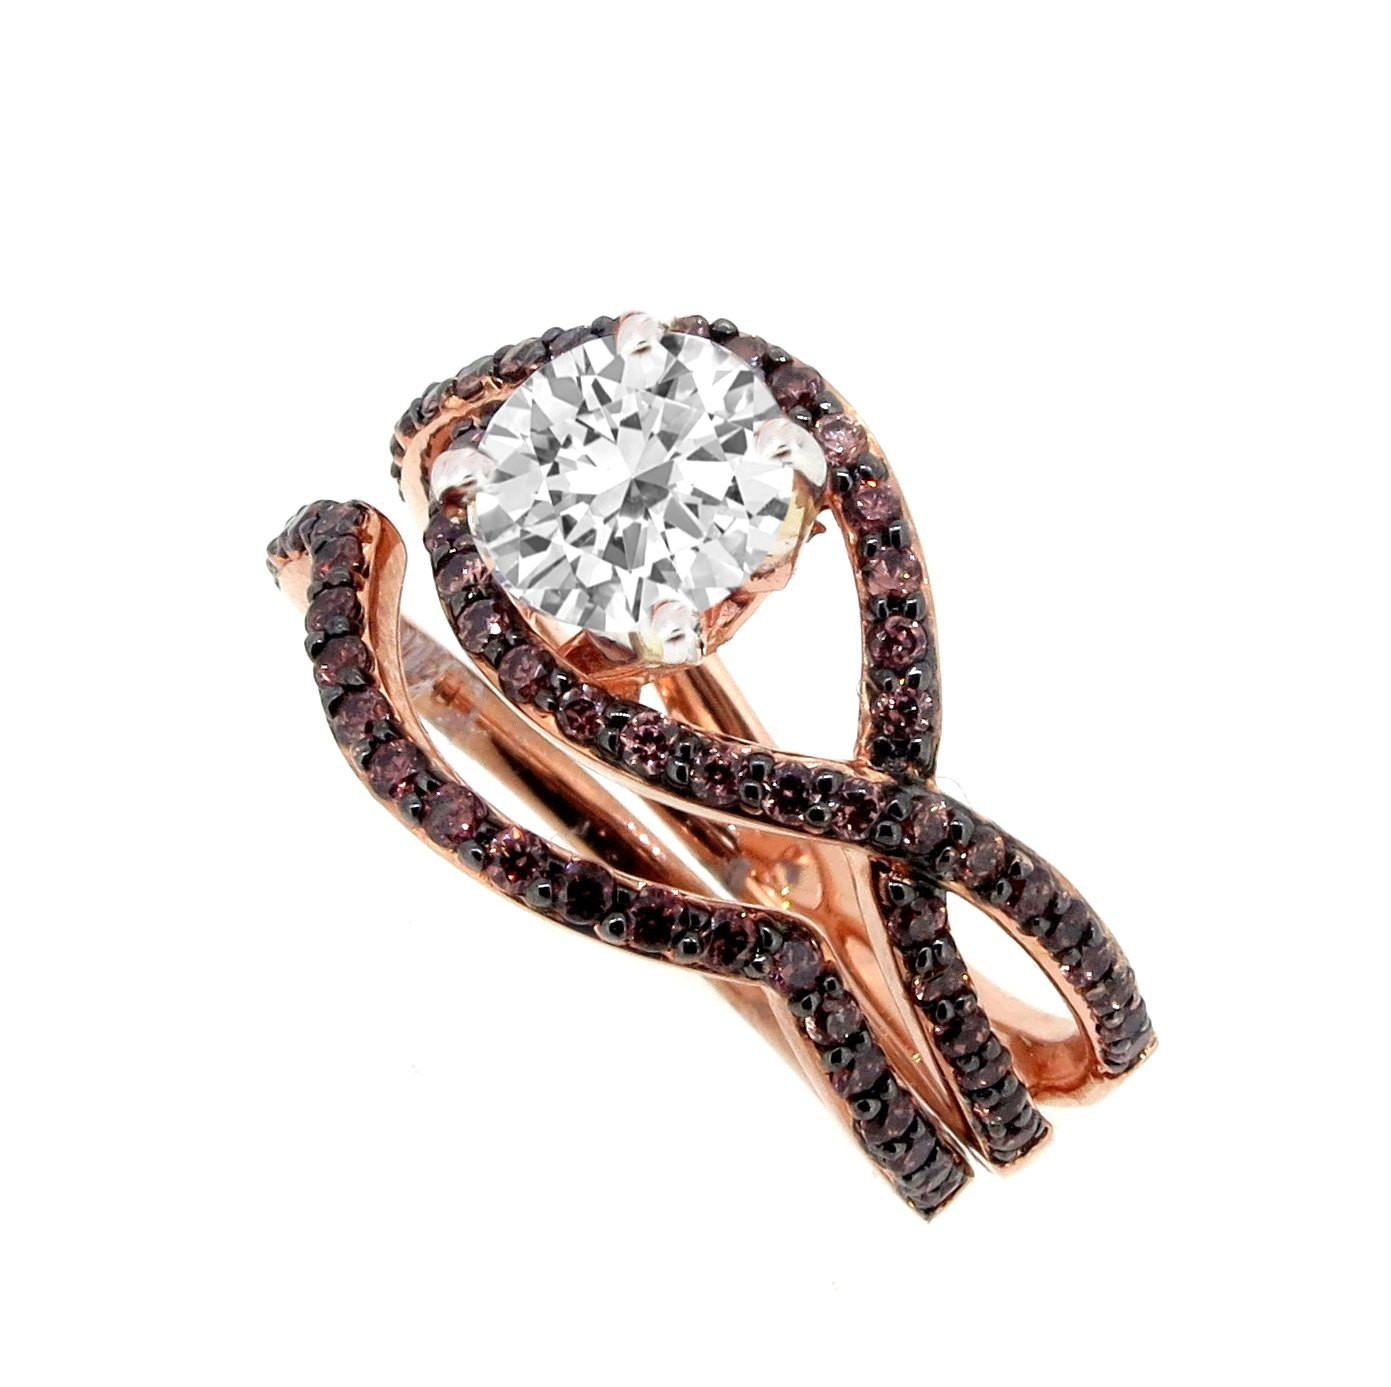 Chocolate Diamond Wedding Rings
 Unique Infinity Chocolate Brown Diamond Engagement and